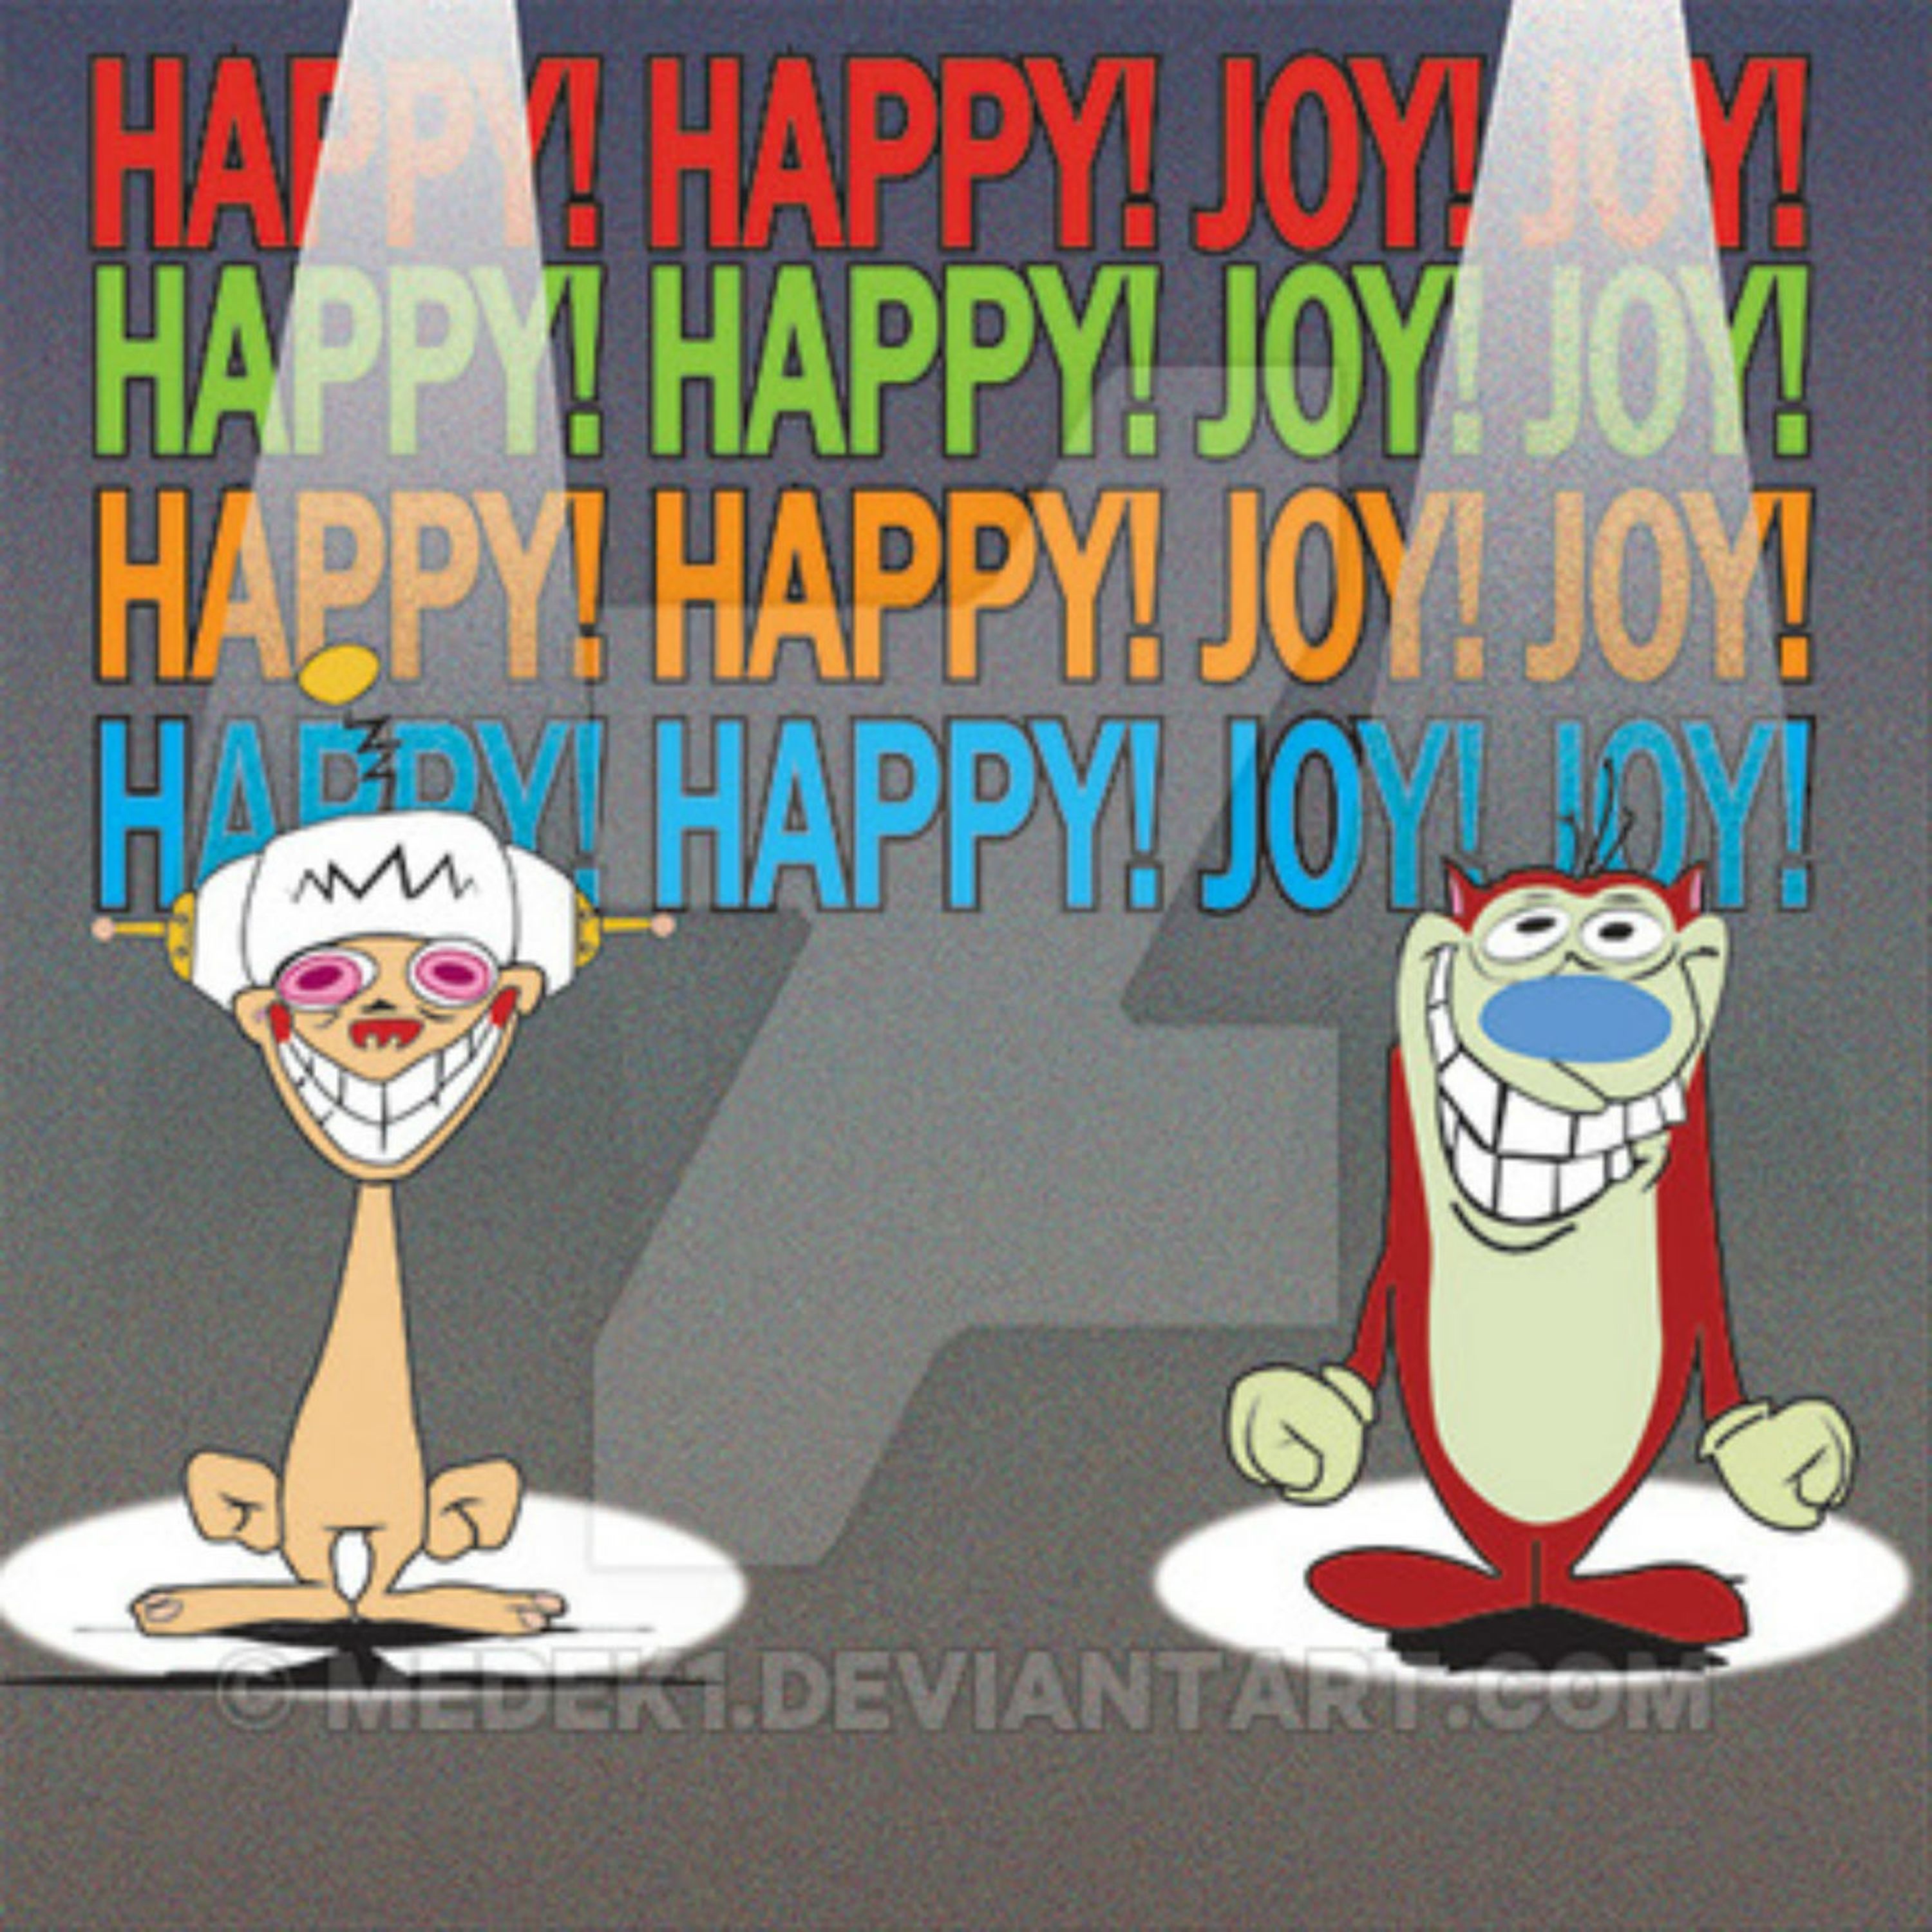 Happy happy joy joy lyrics